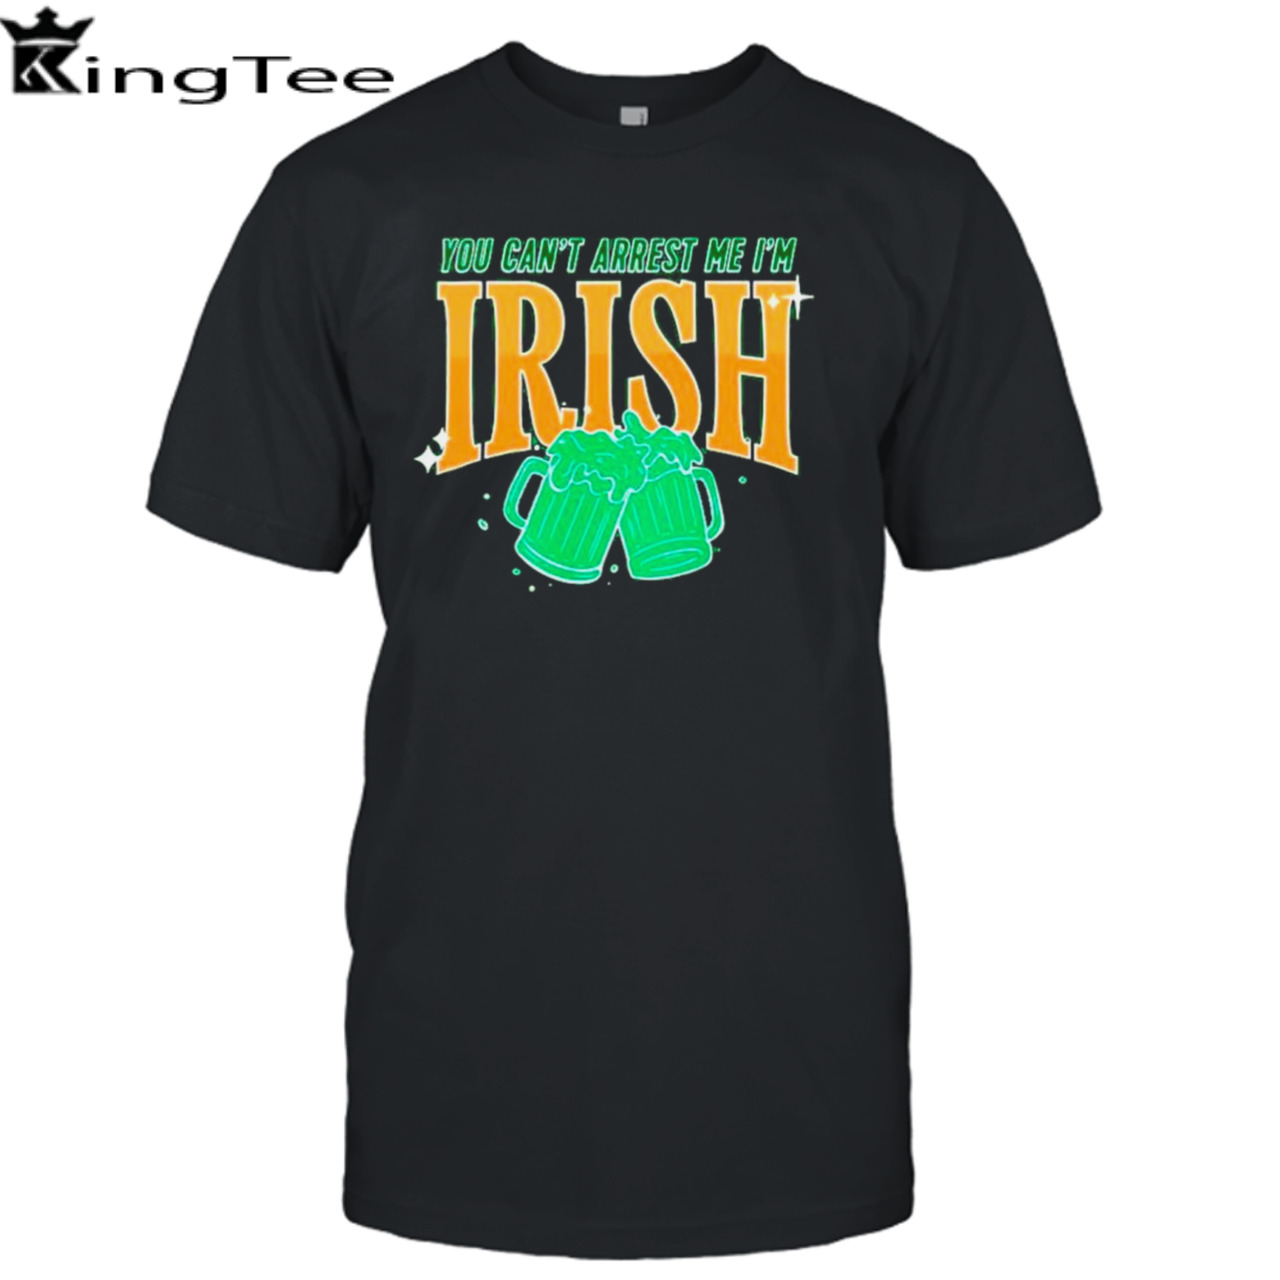 You can’t arrest me I’m Irish St. Patrick’s day shirt